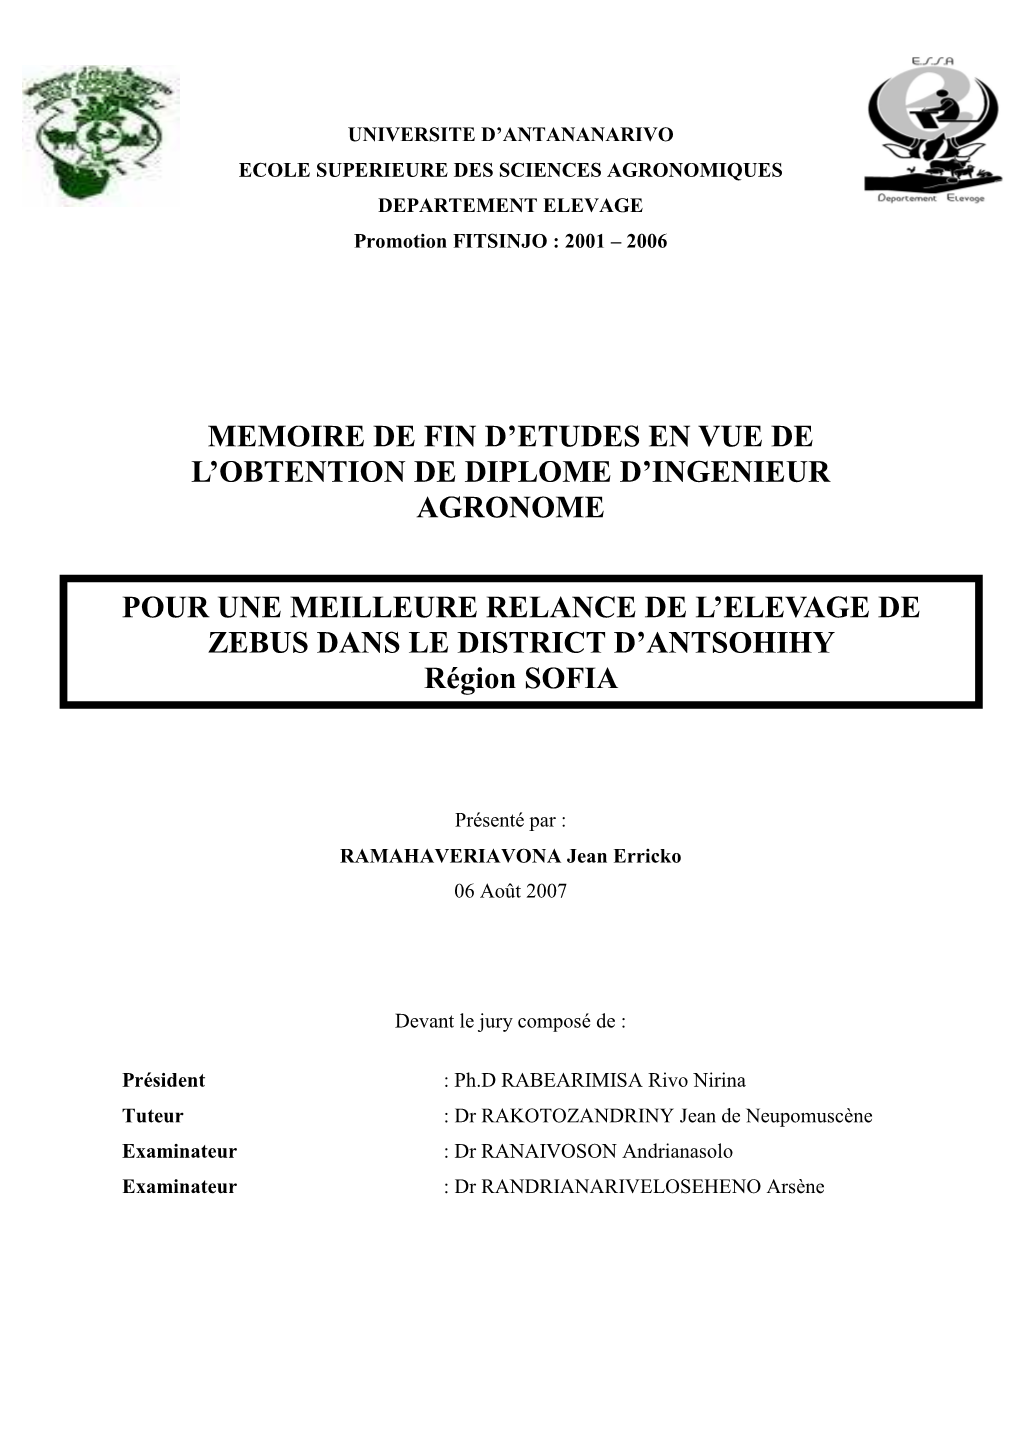 Memoire De Fin D'etudes Erricko VERSION Finaledoc